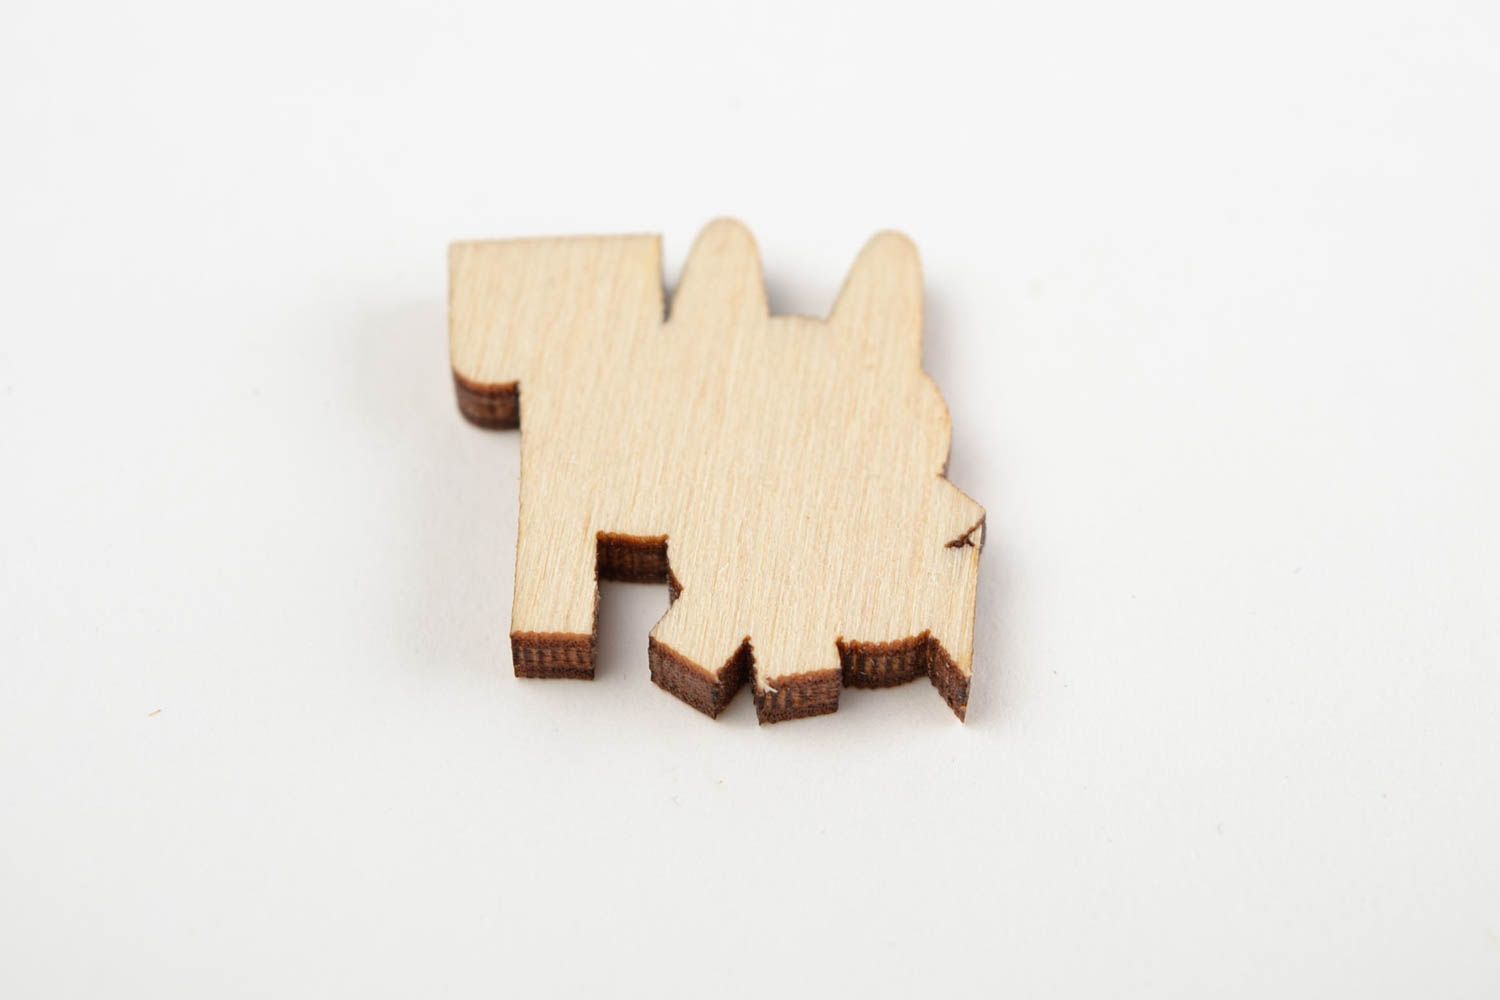 Handmade Holz Rohling Figur zum Bemalen Scrapbooking Material lustig klein foto 5